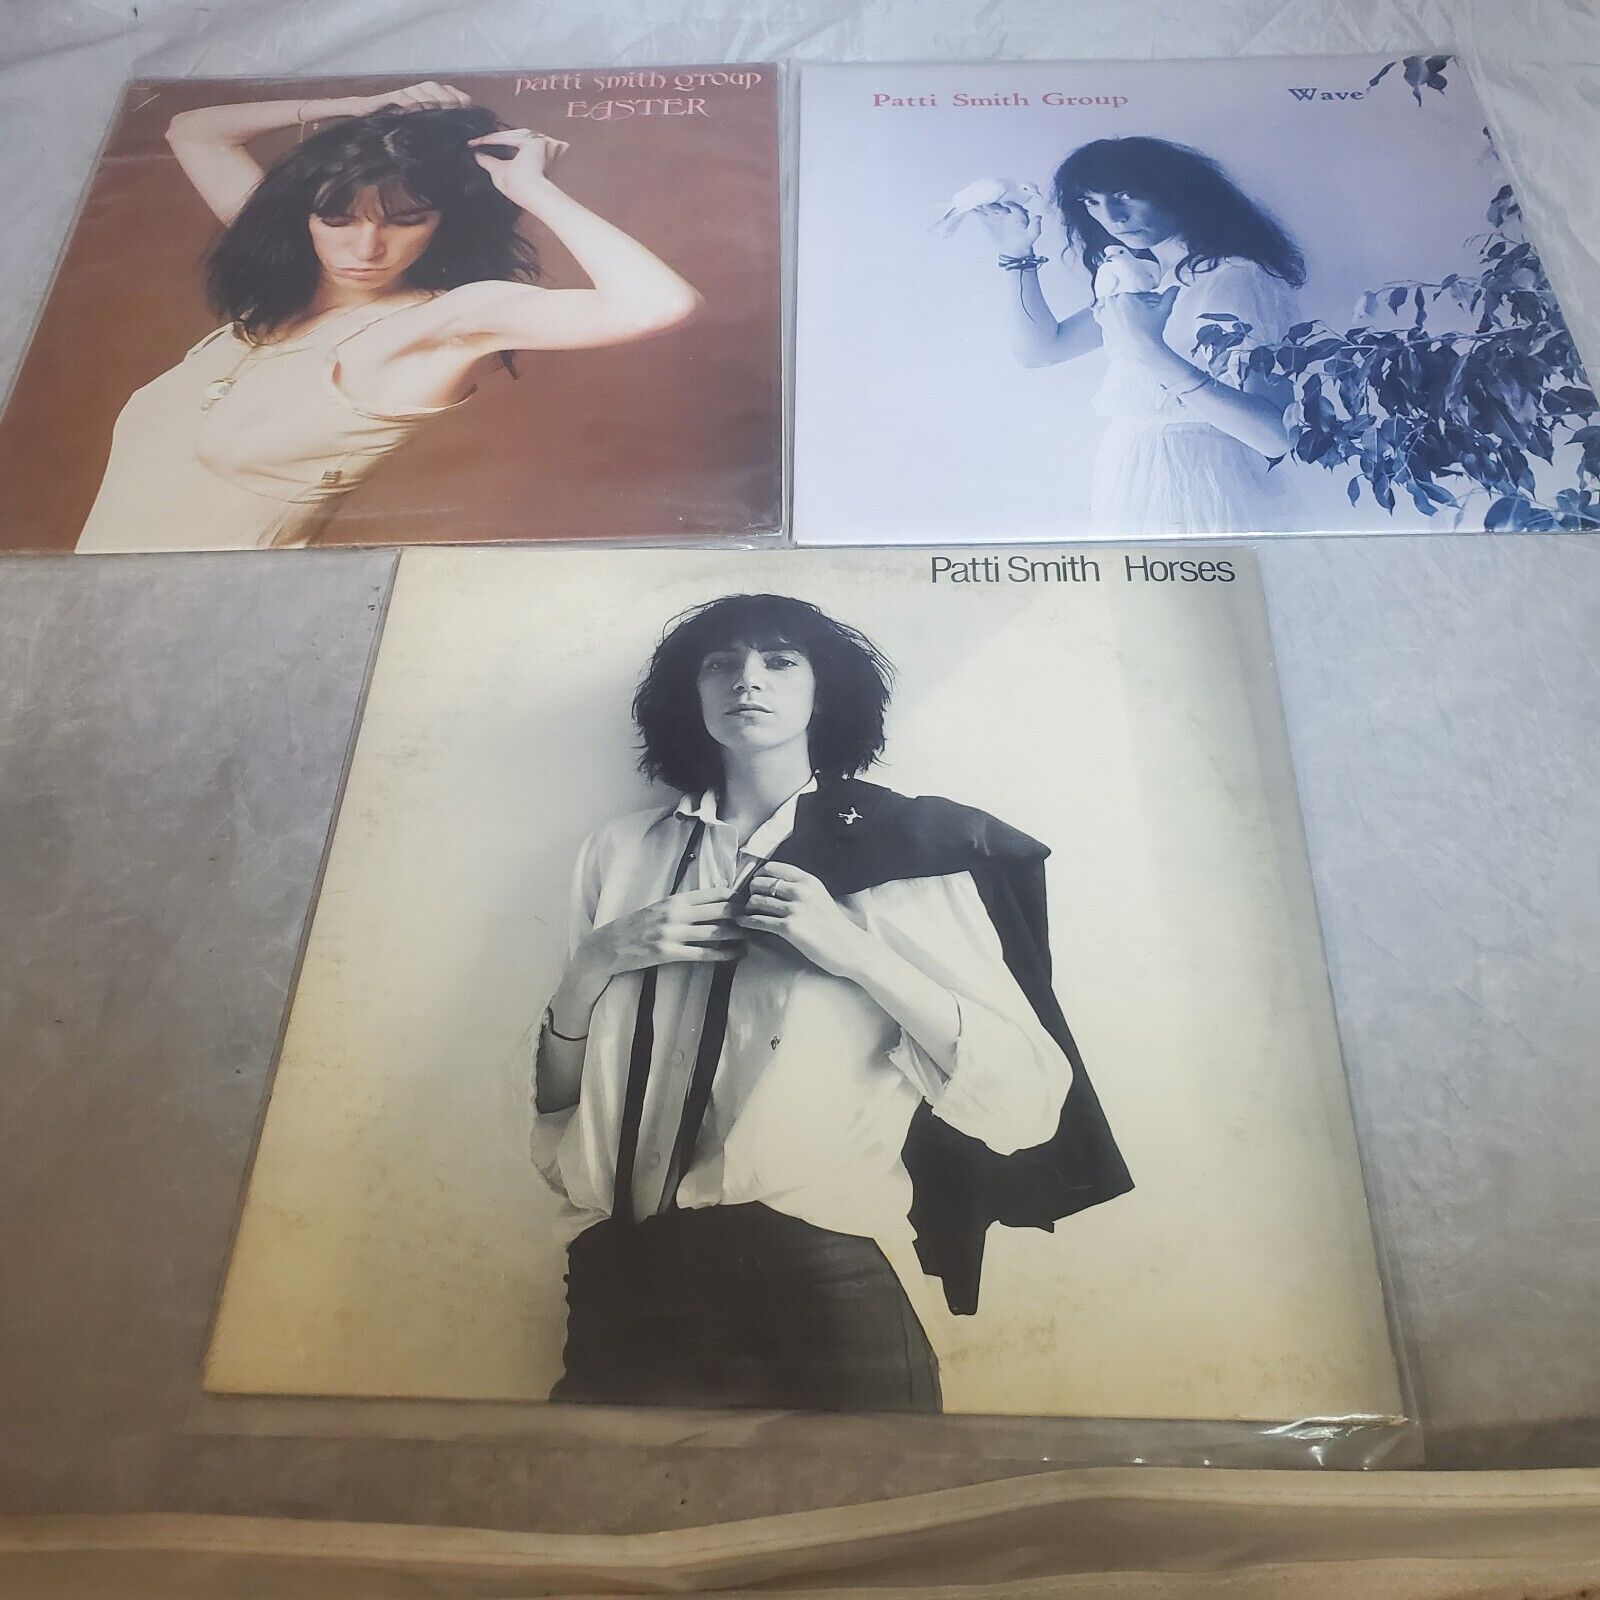 3 LP Patti Smith Group lot Horses, Wave, Easter Vinyl rare Canada Press records Без бренда